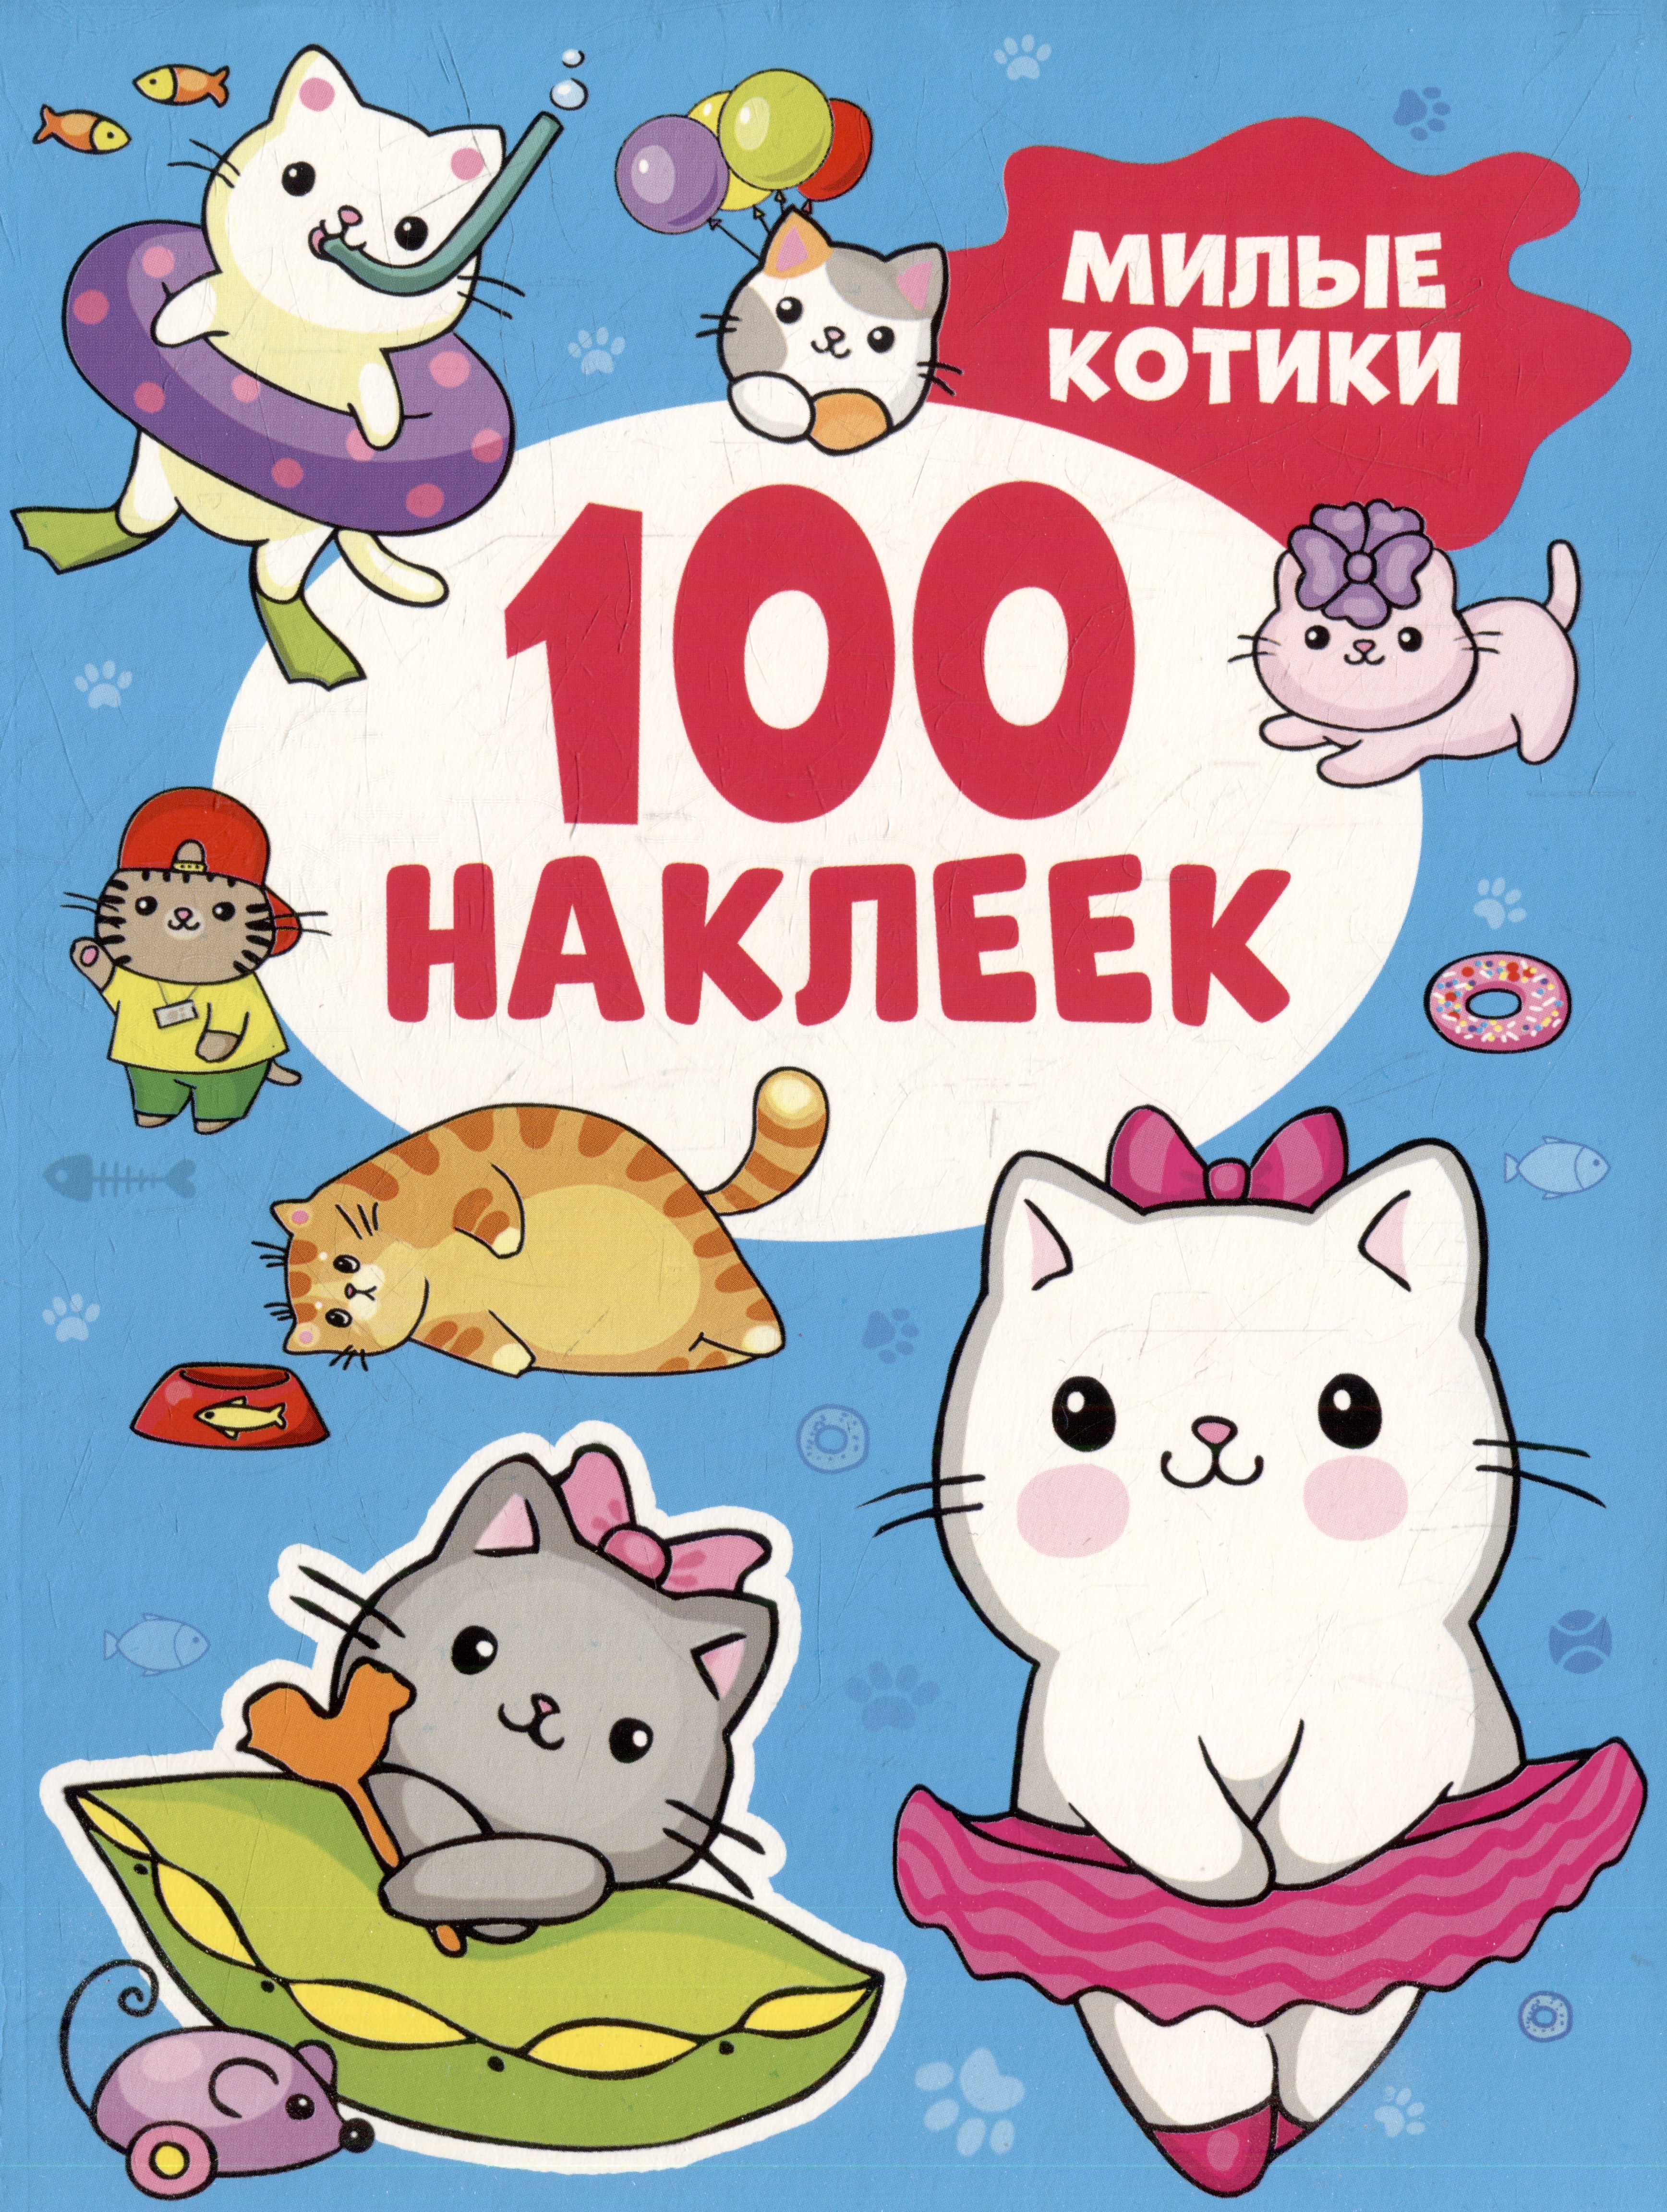 100 наклеек милые единорожки Милые котики (100 наклеек)